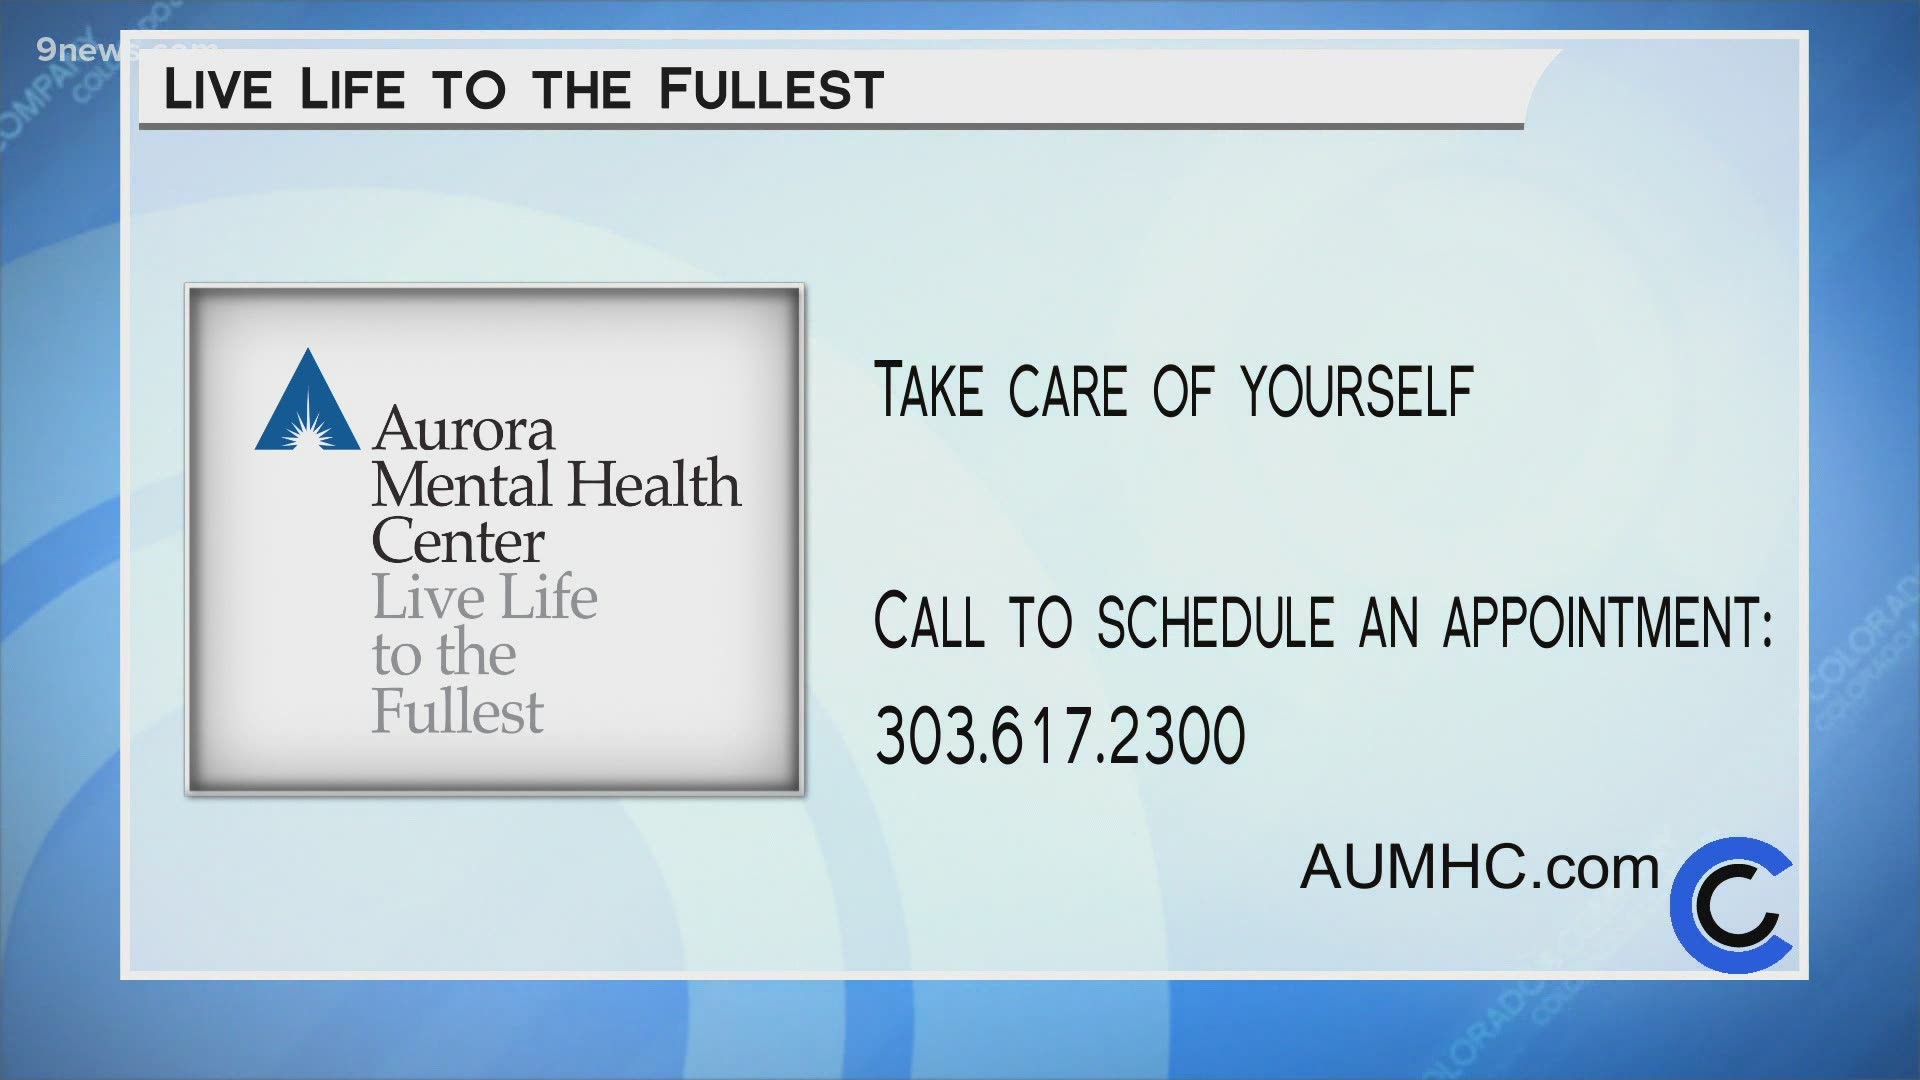 Aurora Mental Health can help you through these tough times. Call them at 303.617.2300 or visit AUMHC.org.